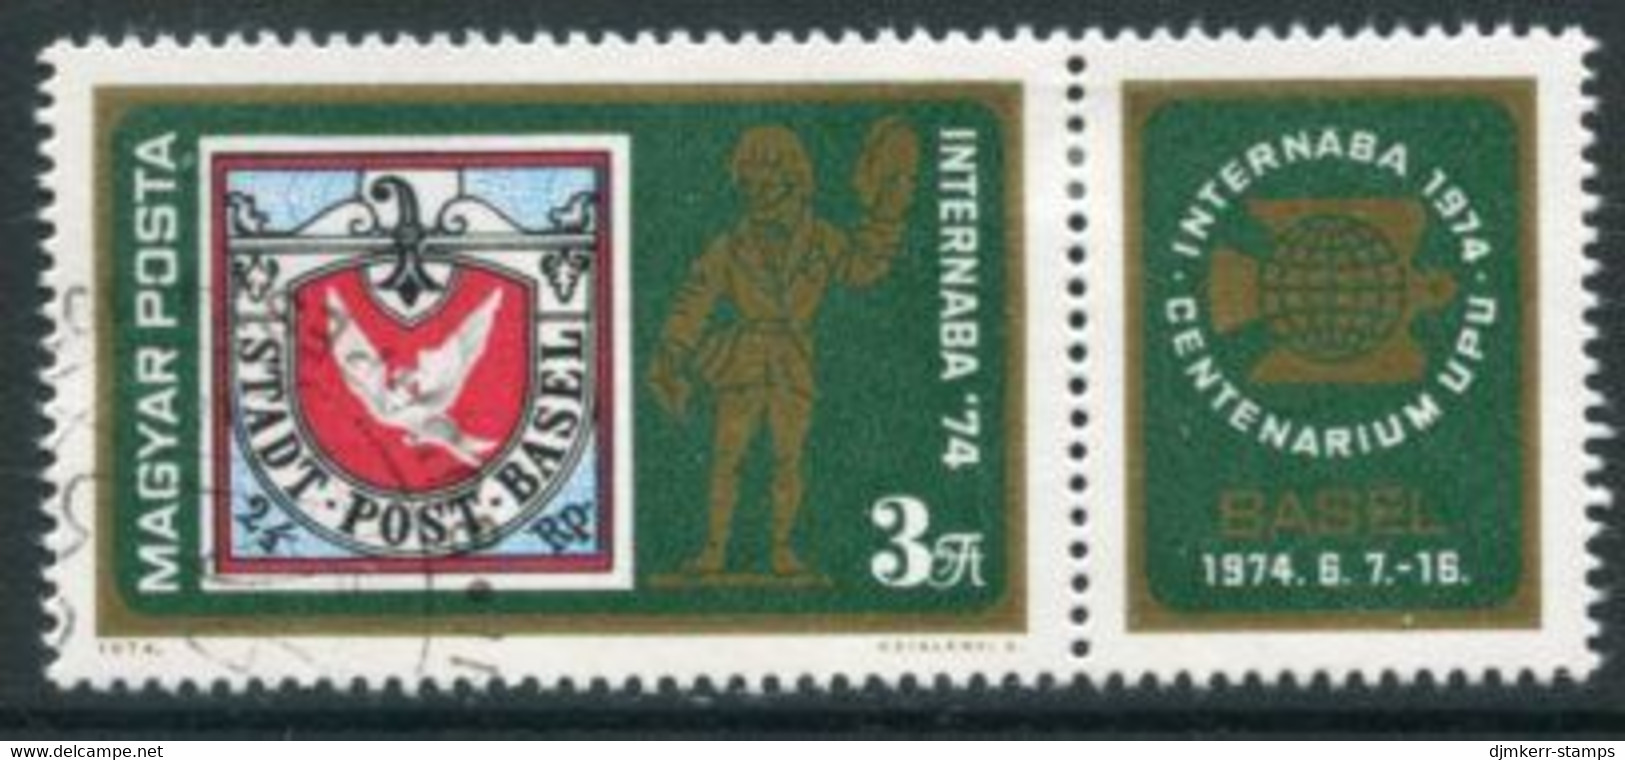 HUNGARY 1974 INTERNABA Stamp Exhibition Used.  Michel 2956 - Usati